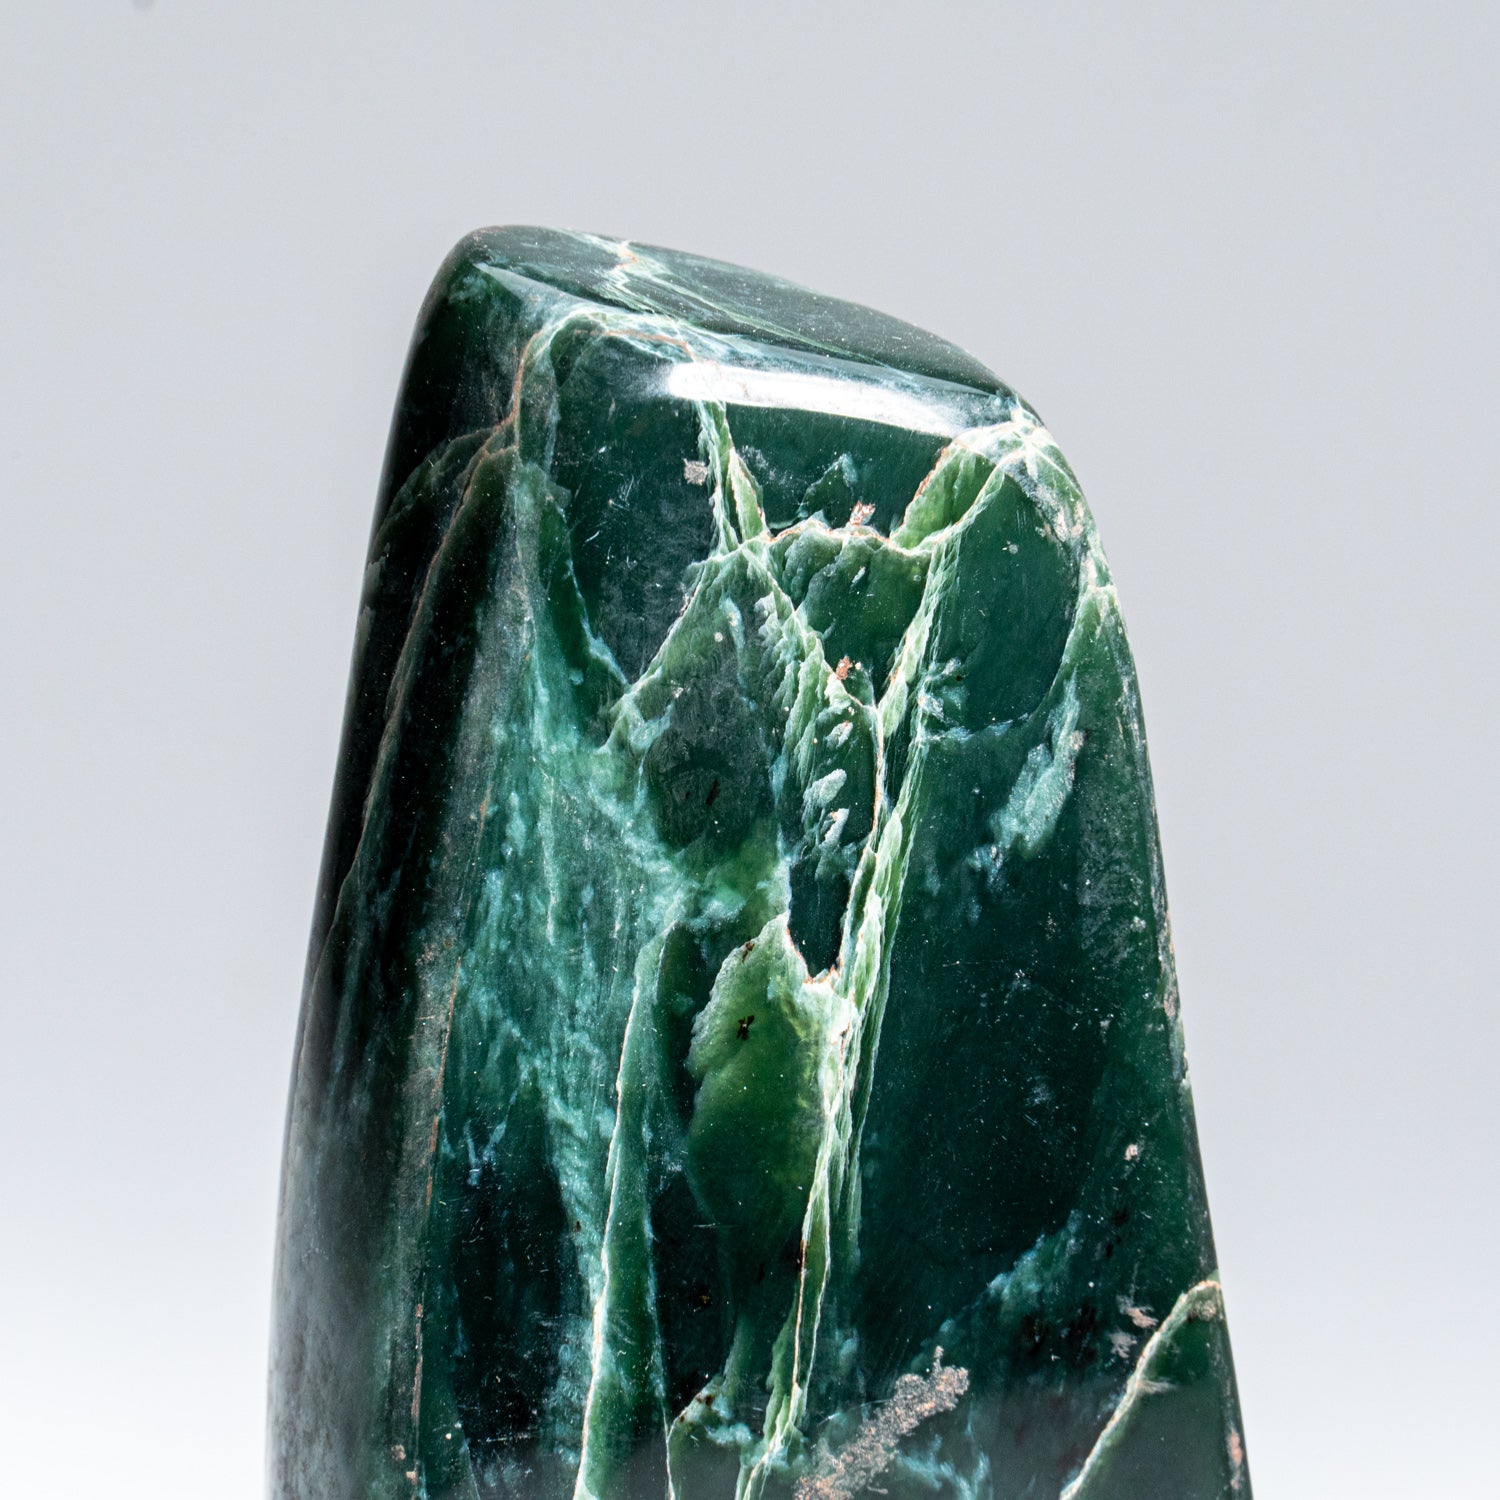 Polished Nephrite Jade Freeform from Pakistan (376.8 grams)